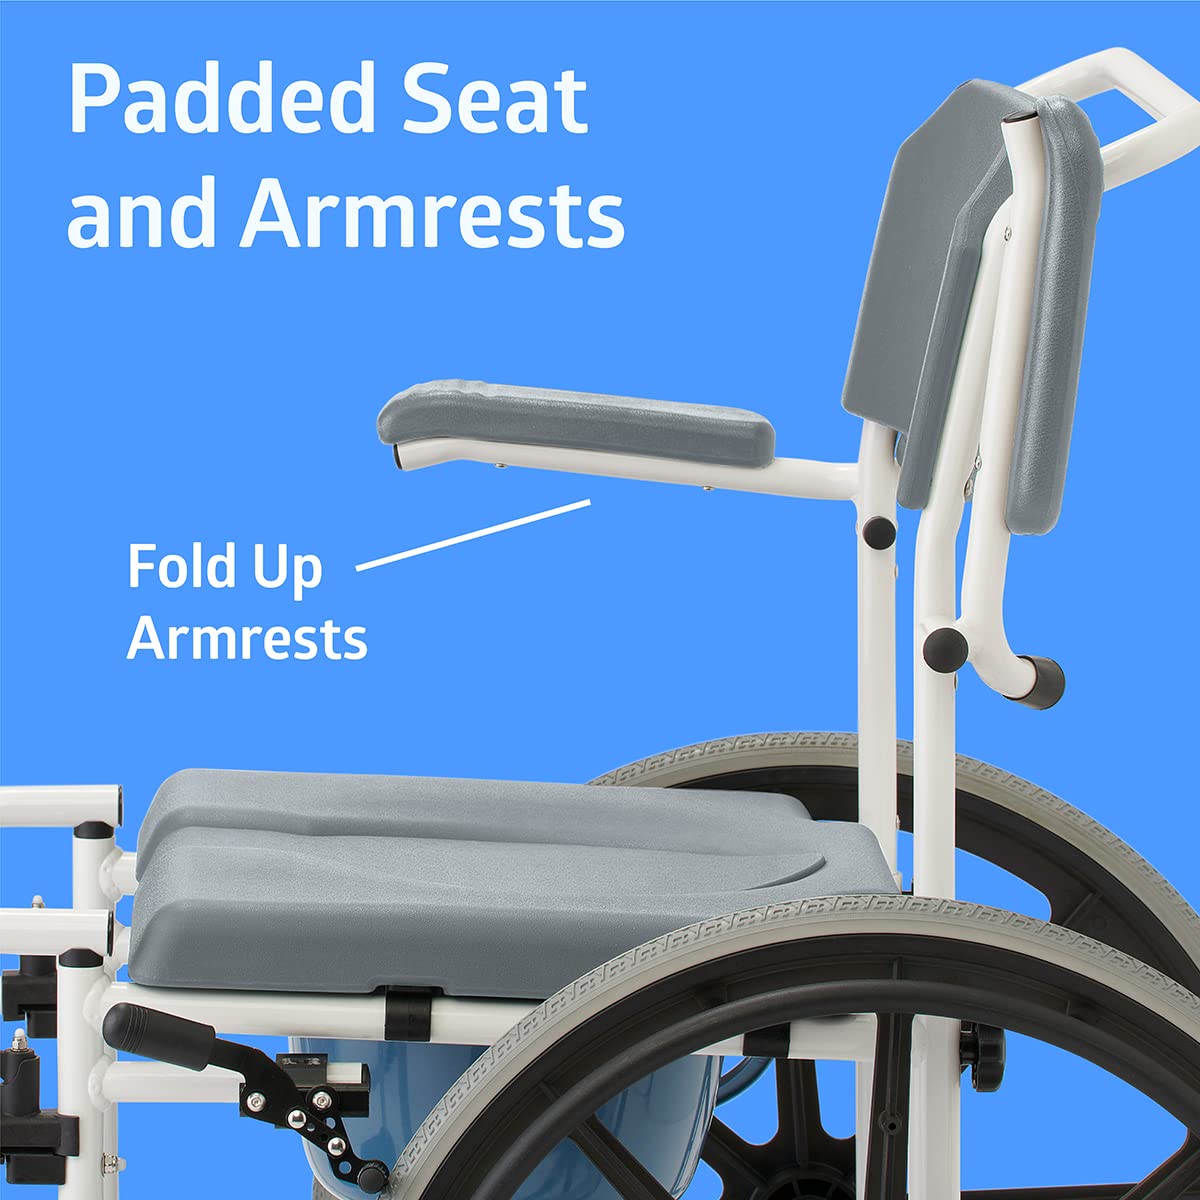 Medline Aluminum Shower Commode Wheelchair, 275 lbs. Capacity — for Seniors & Injured in Restroom, Bathroom or As Toilet, 1 Ct.